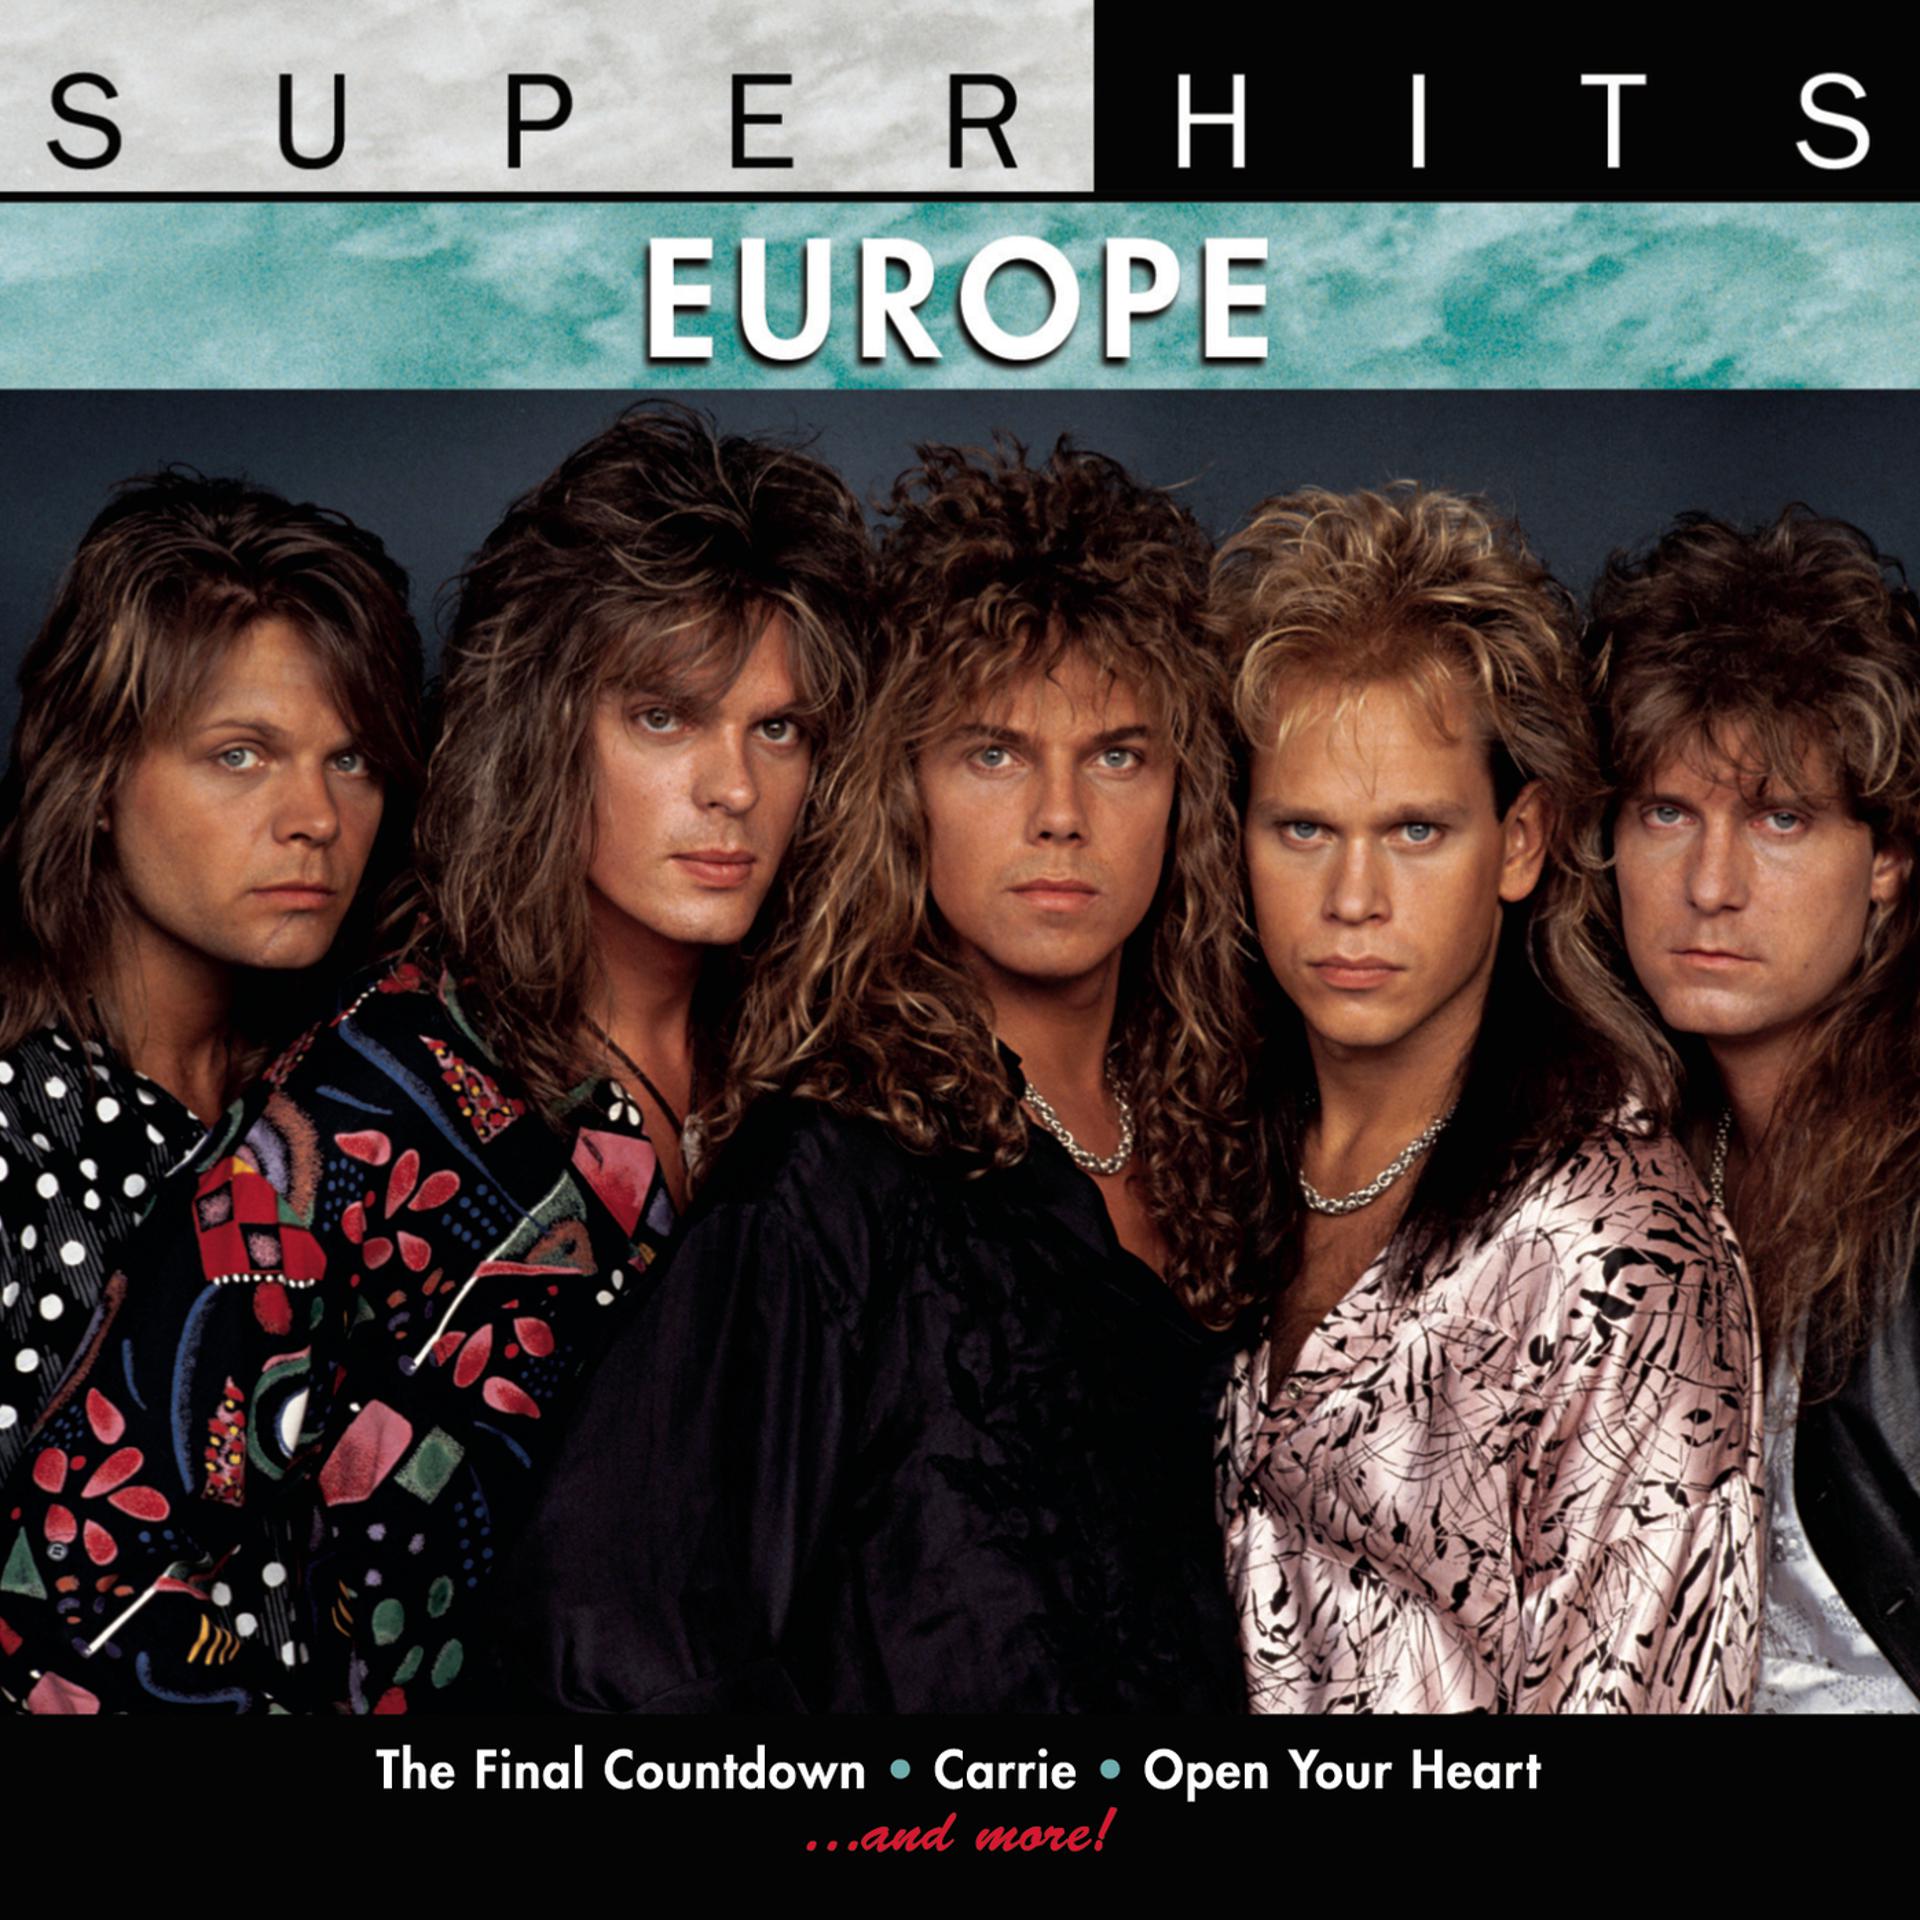 Слушать лучшую музыку европы. Europe группа 1986. Europa группа the Final Countdown. Europe Band обложки. Europe the Final Countdown обложка.